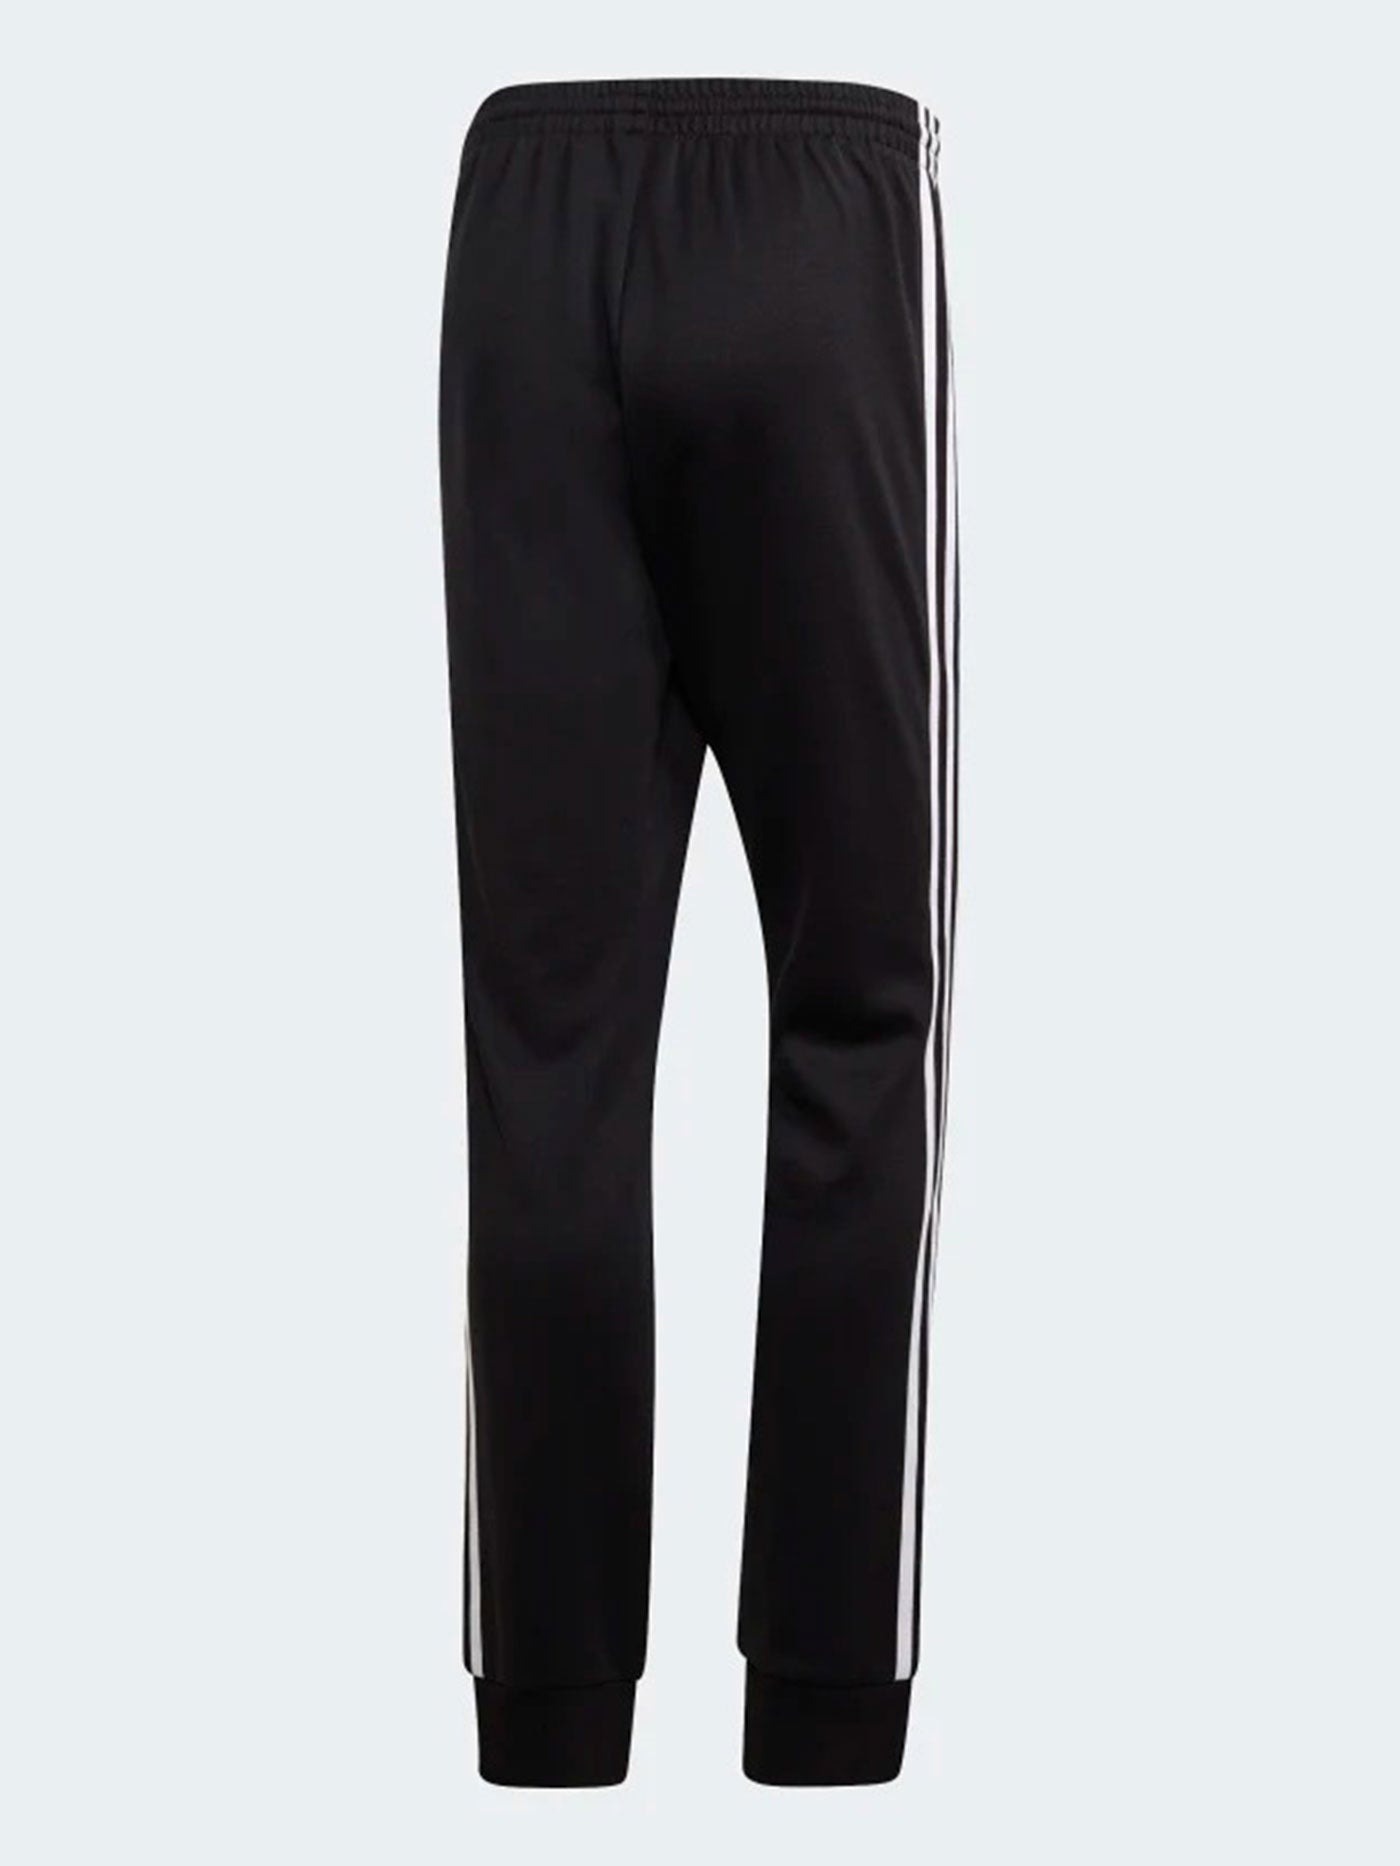 Adidas Originals Adicolor Classics Primeblue SST Track Pants Black